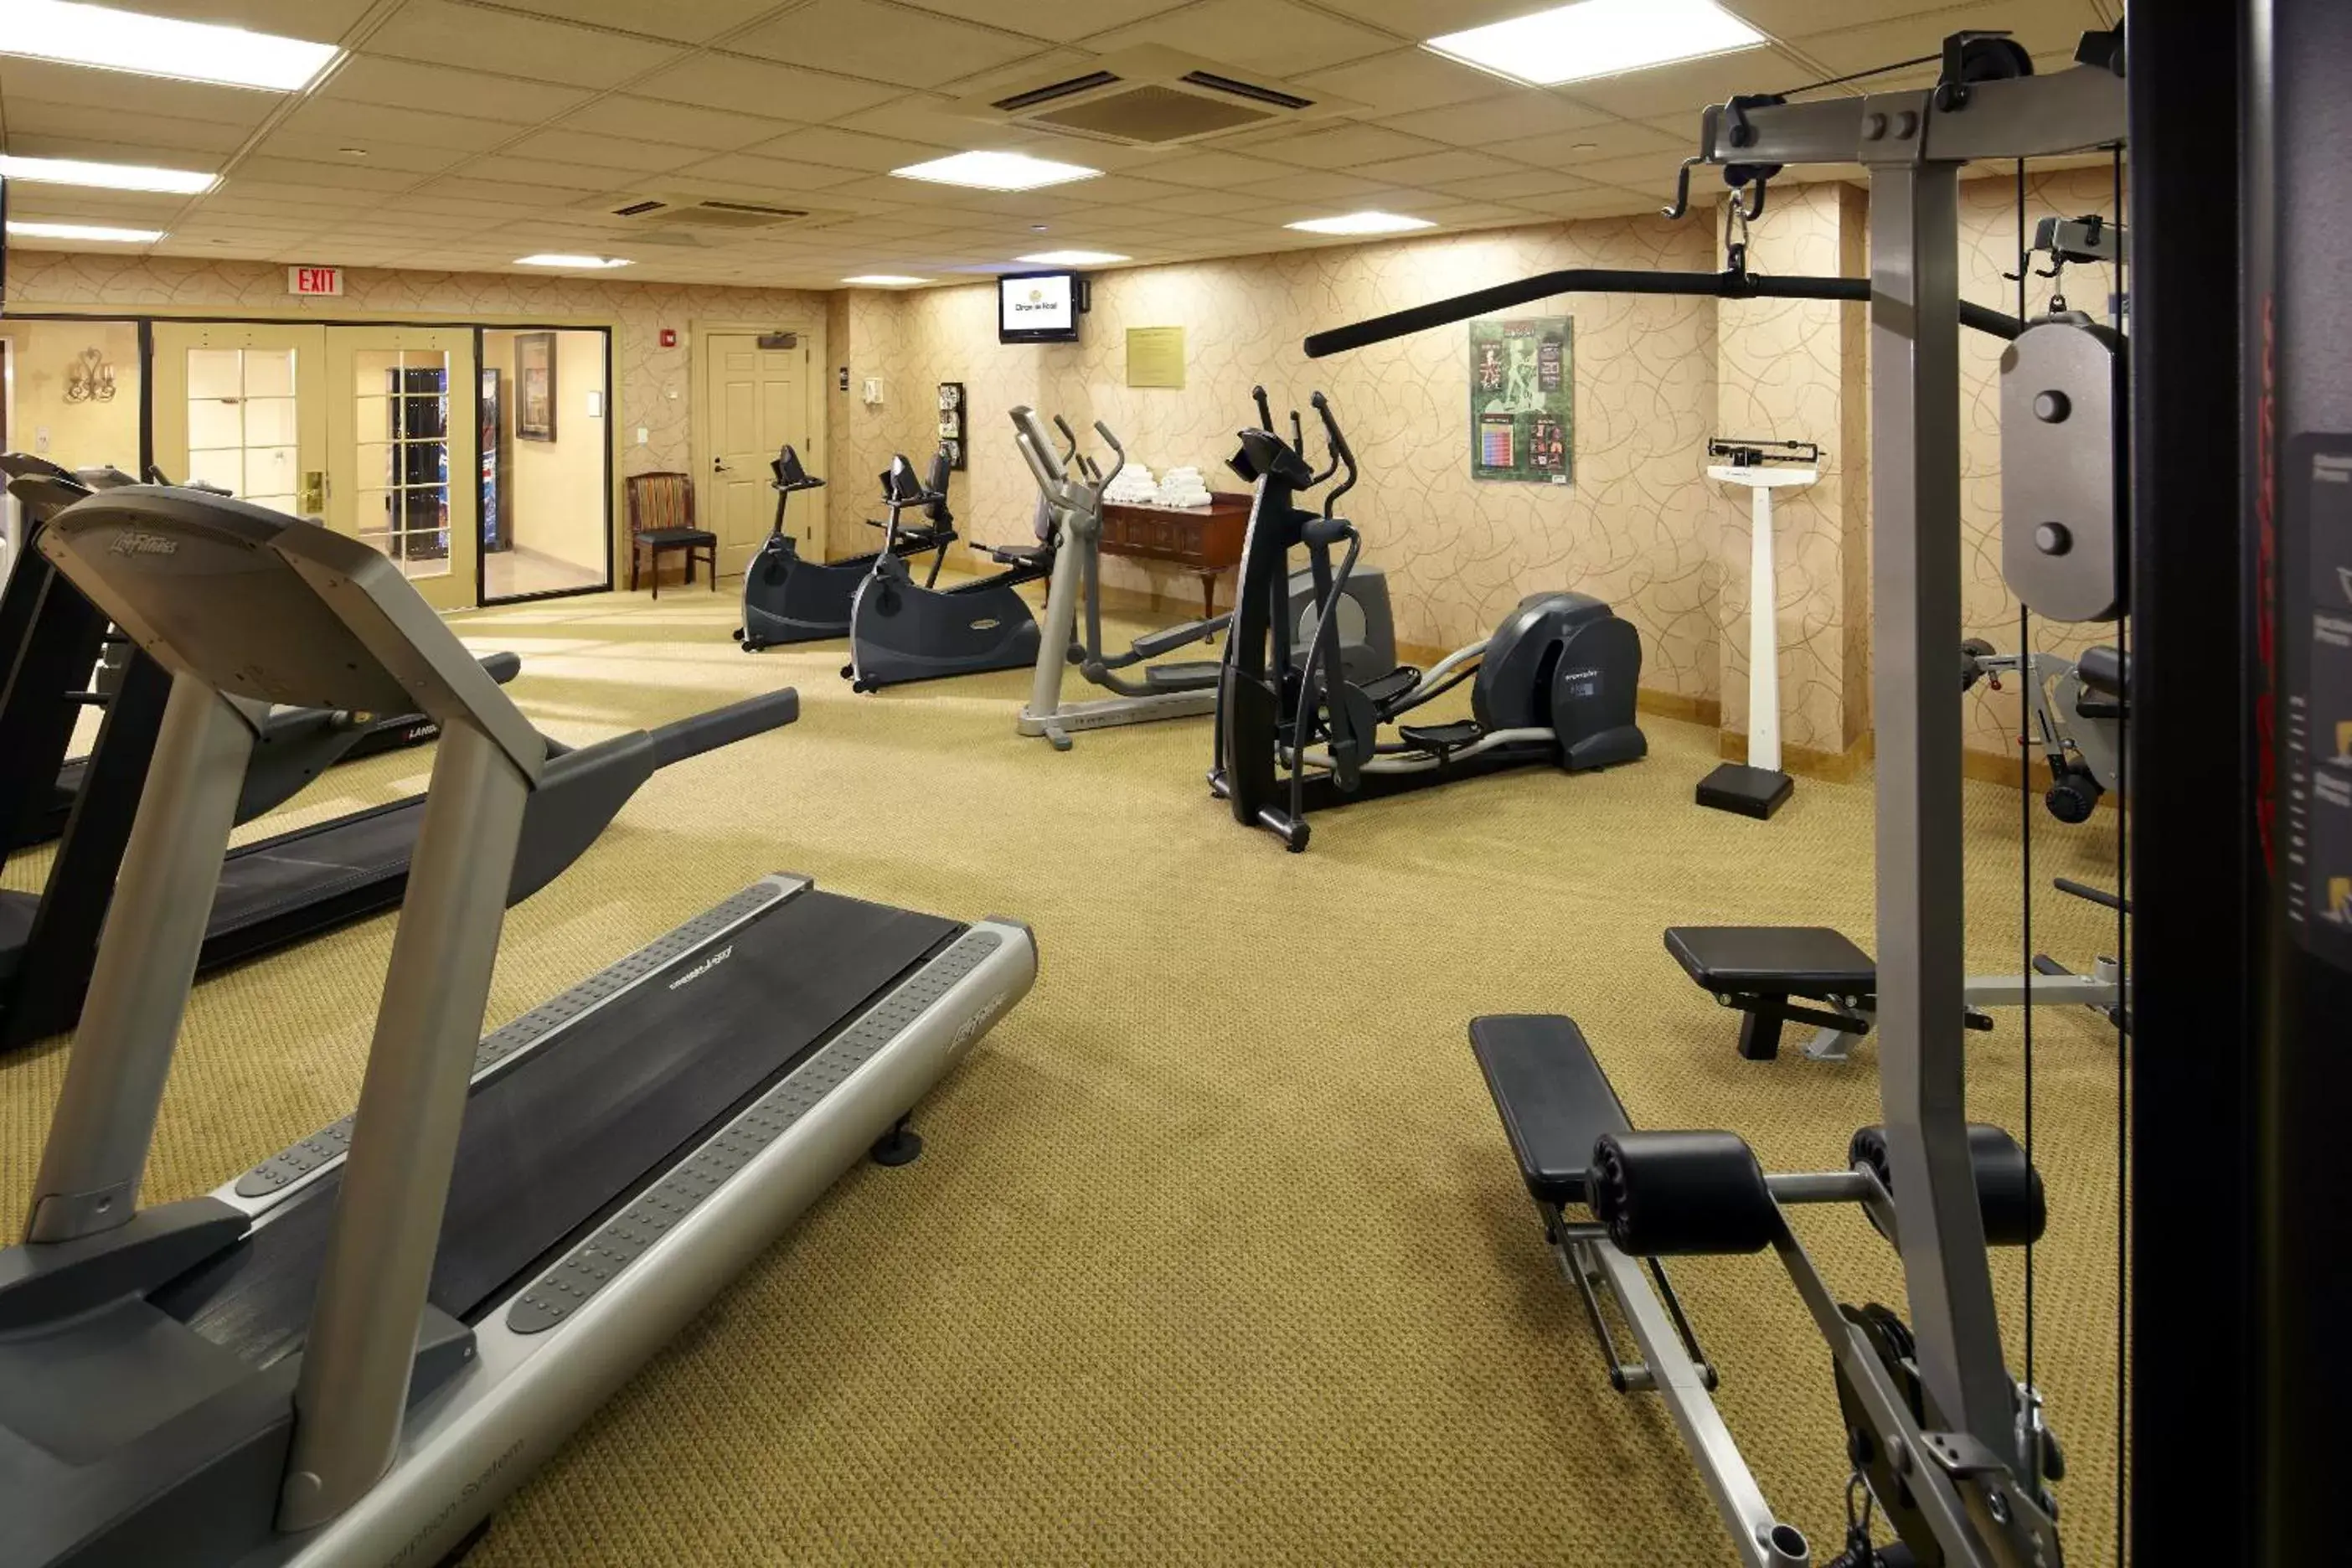 Fitness centre/facilities, Fitness Center/Facilities in Clinton Inn Hotel Tenafly